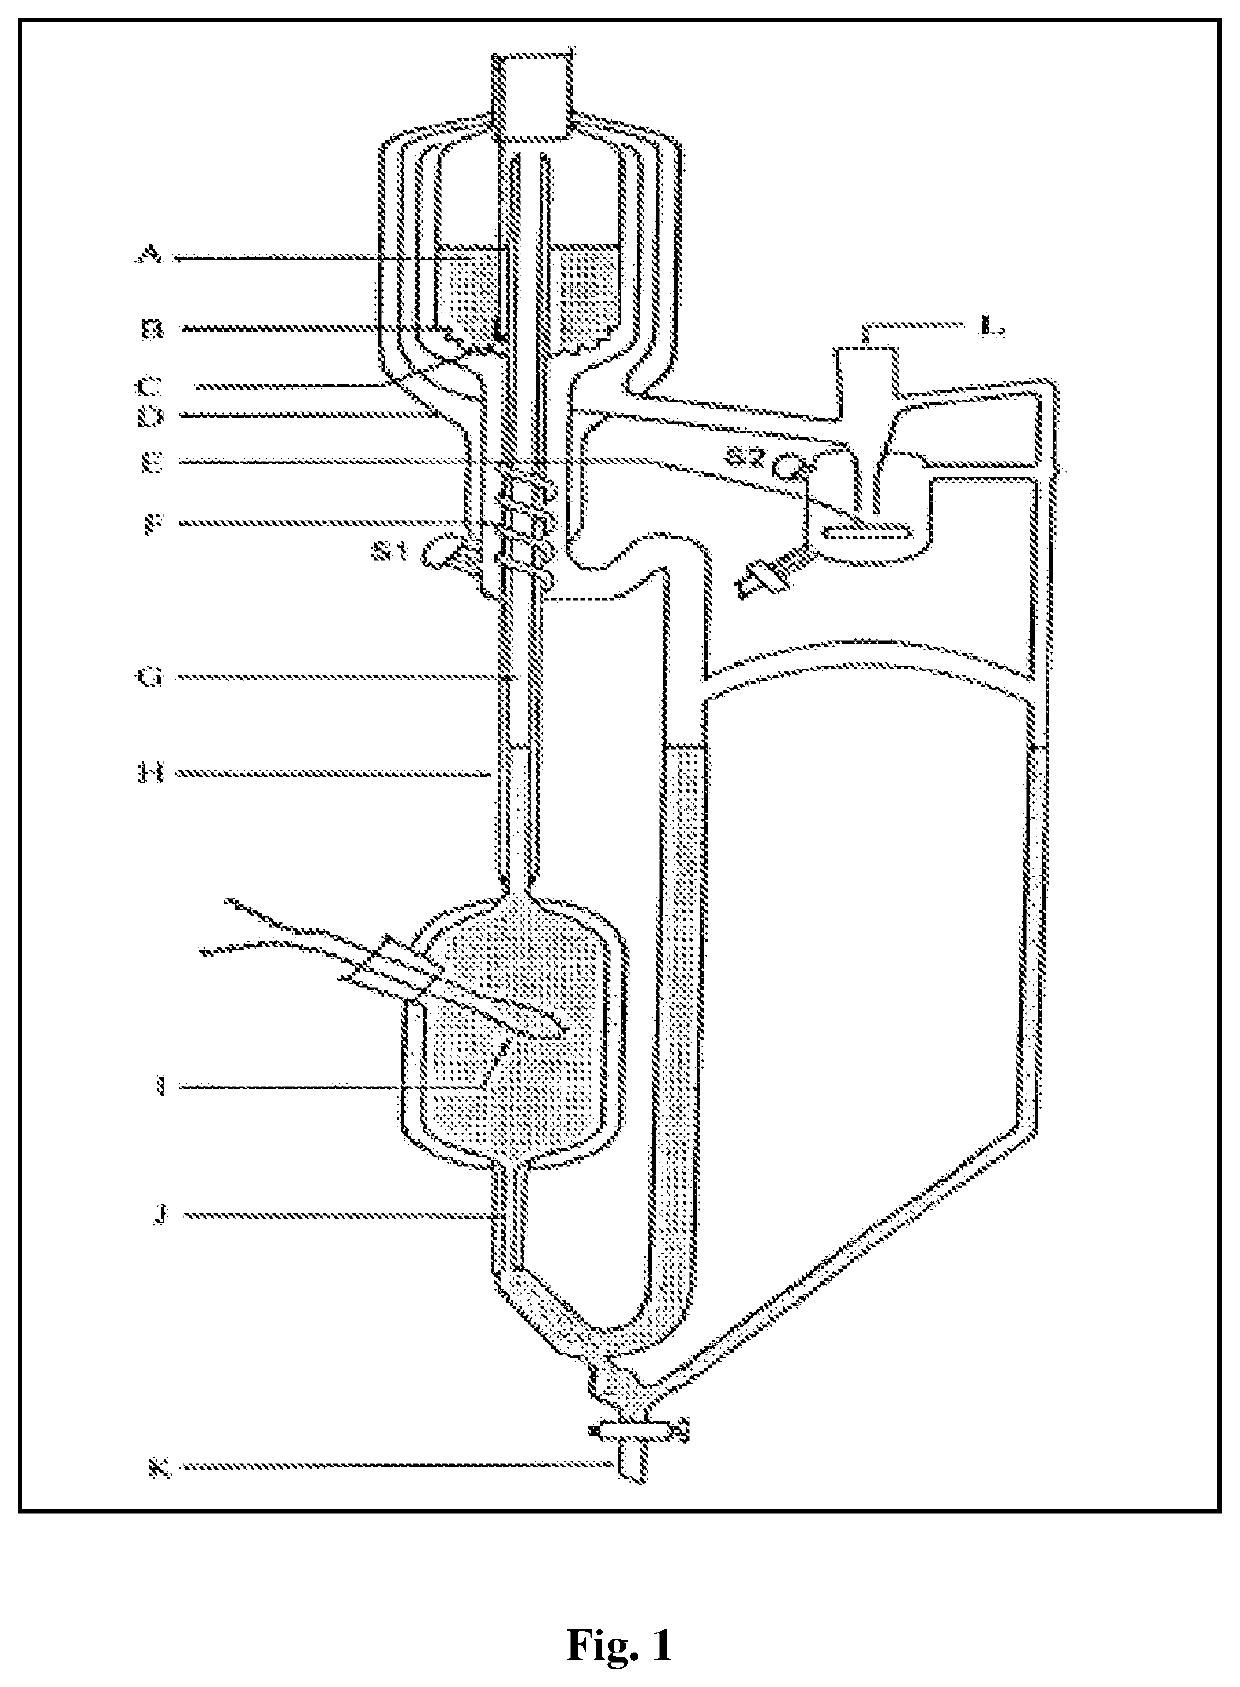 Apparatus for vapour-liquid-equilibrium (VLE) data measurement